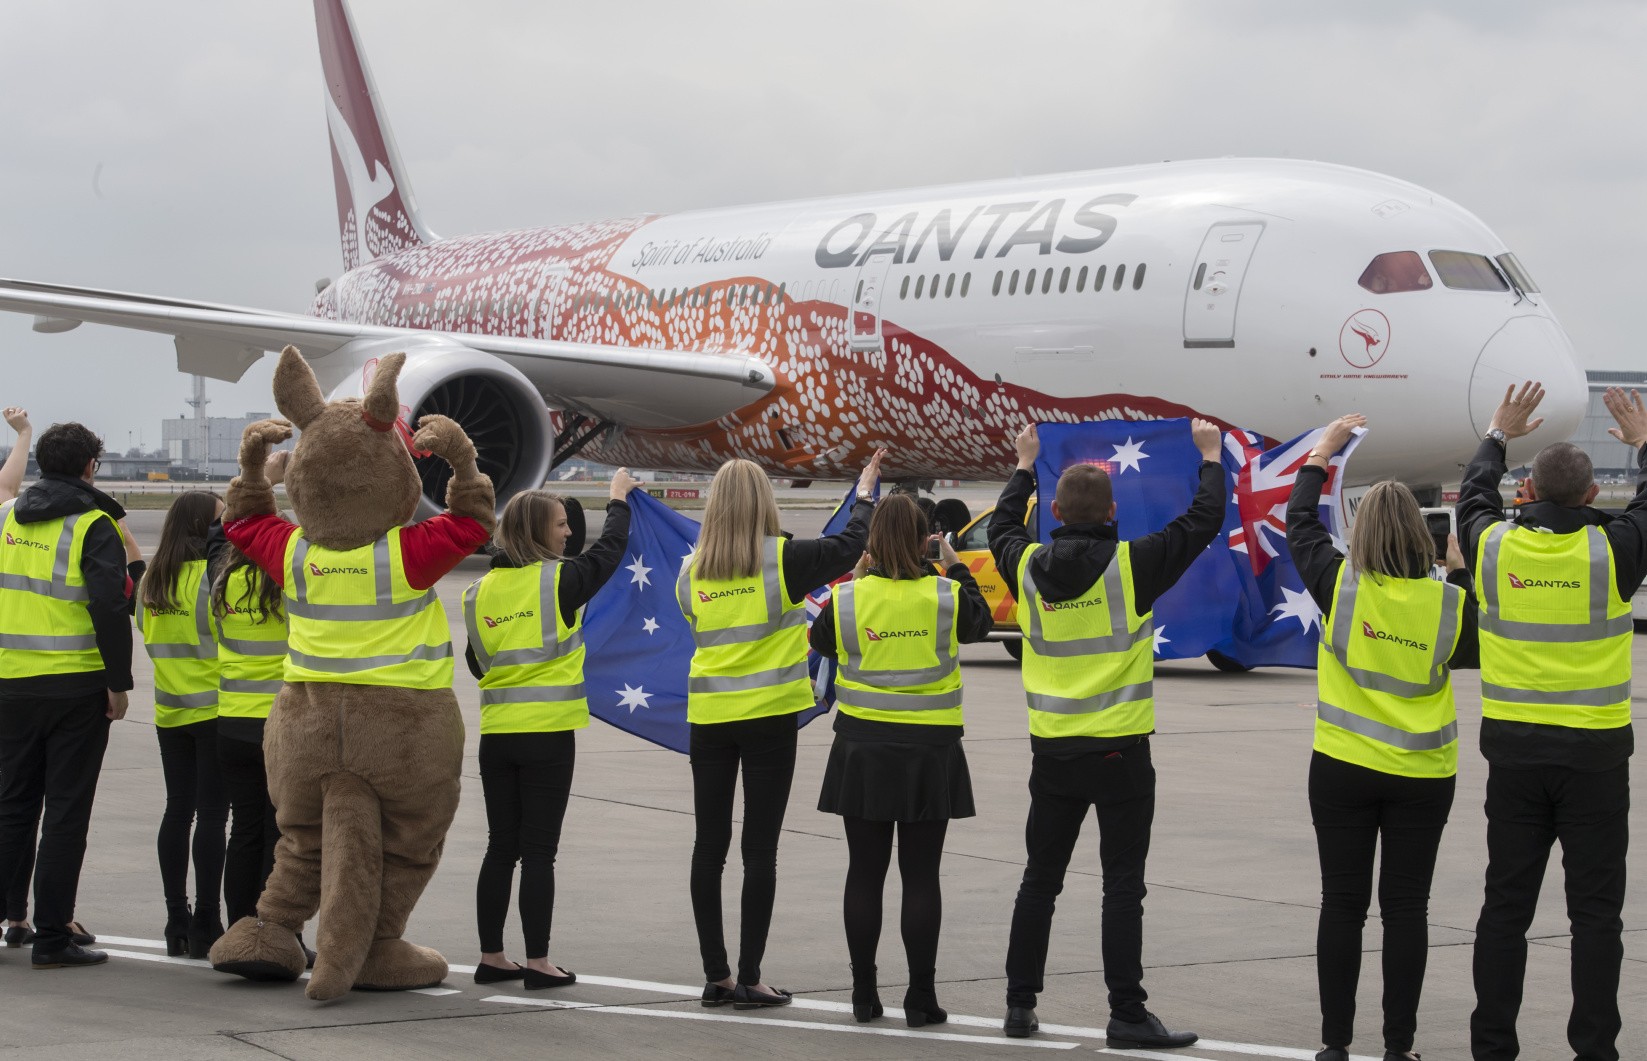 Staff at London’s Heathrow Airport bid farewell to Qantas’ flight QF 10 as it makes the return trip to Australia.